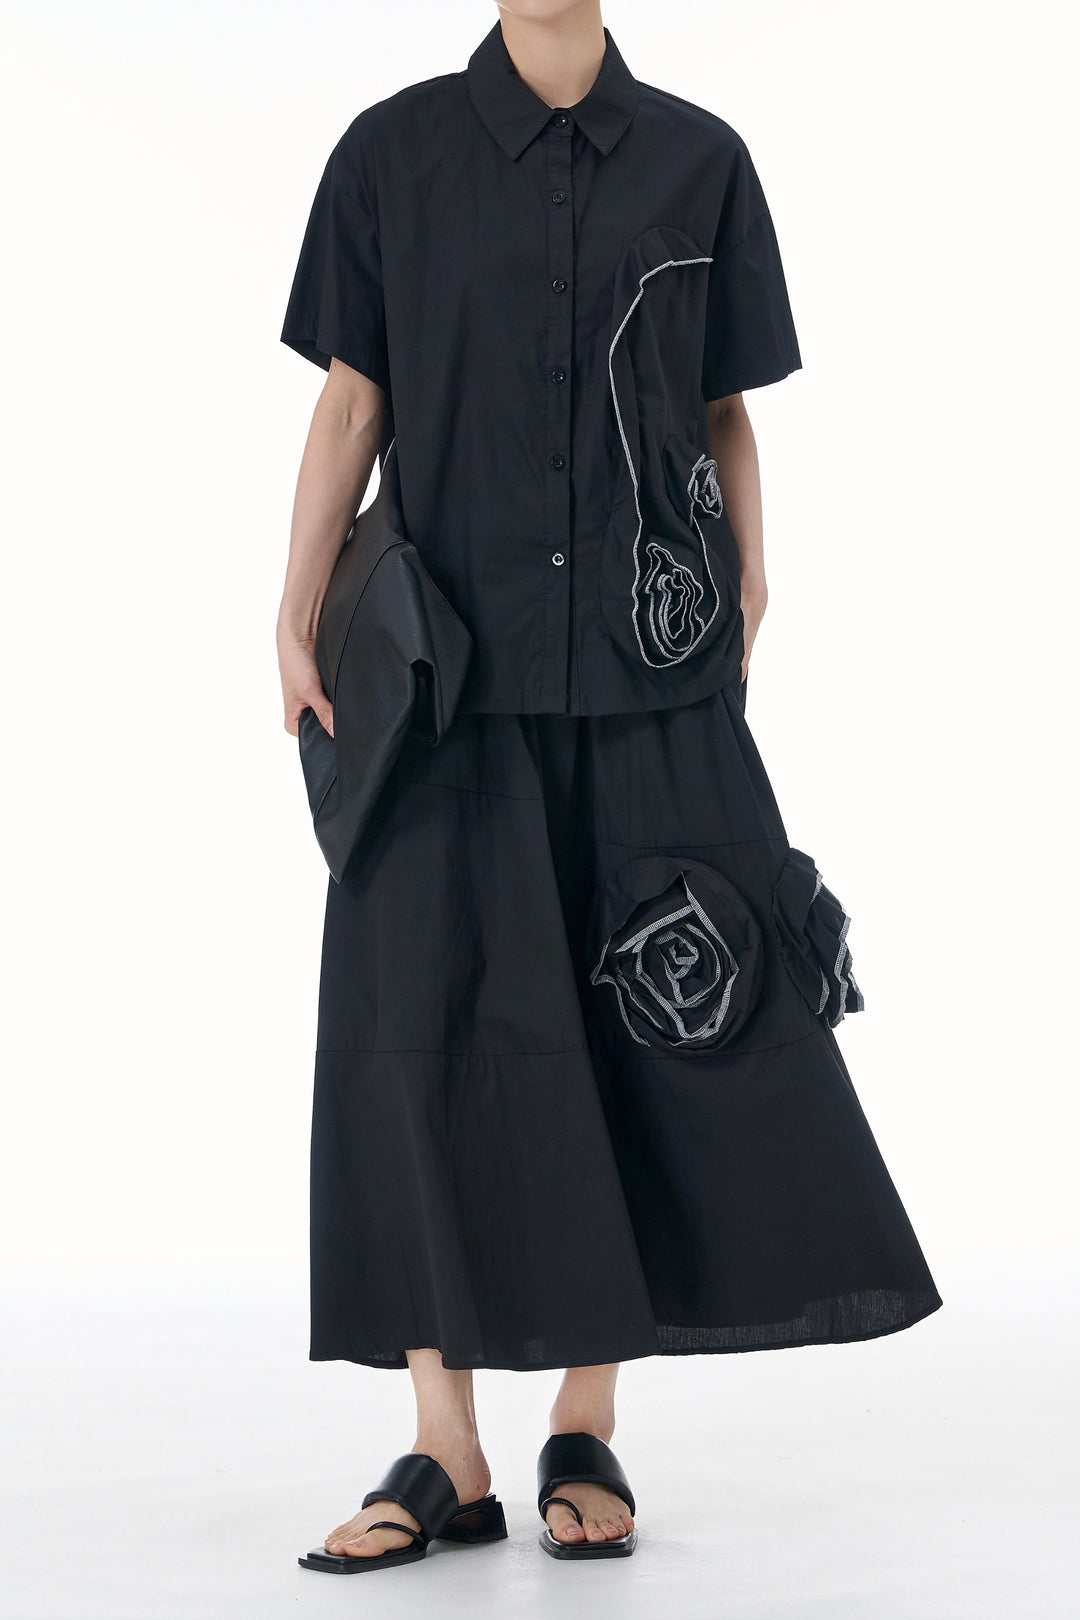 Black skirt coord sets for women